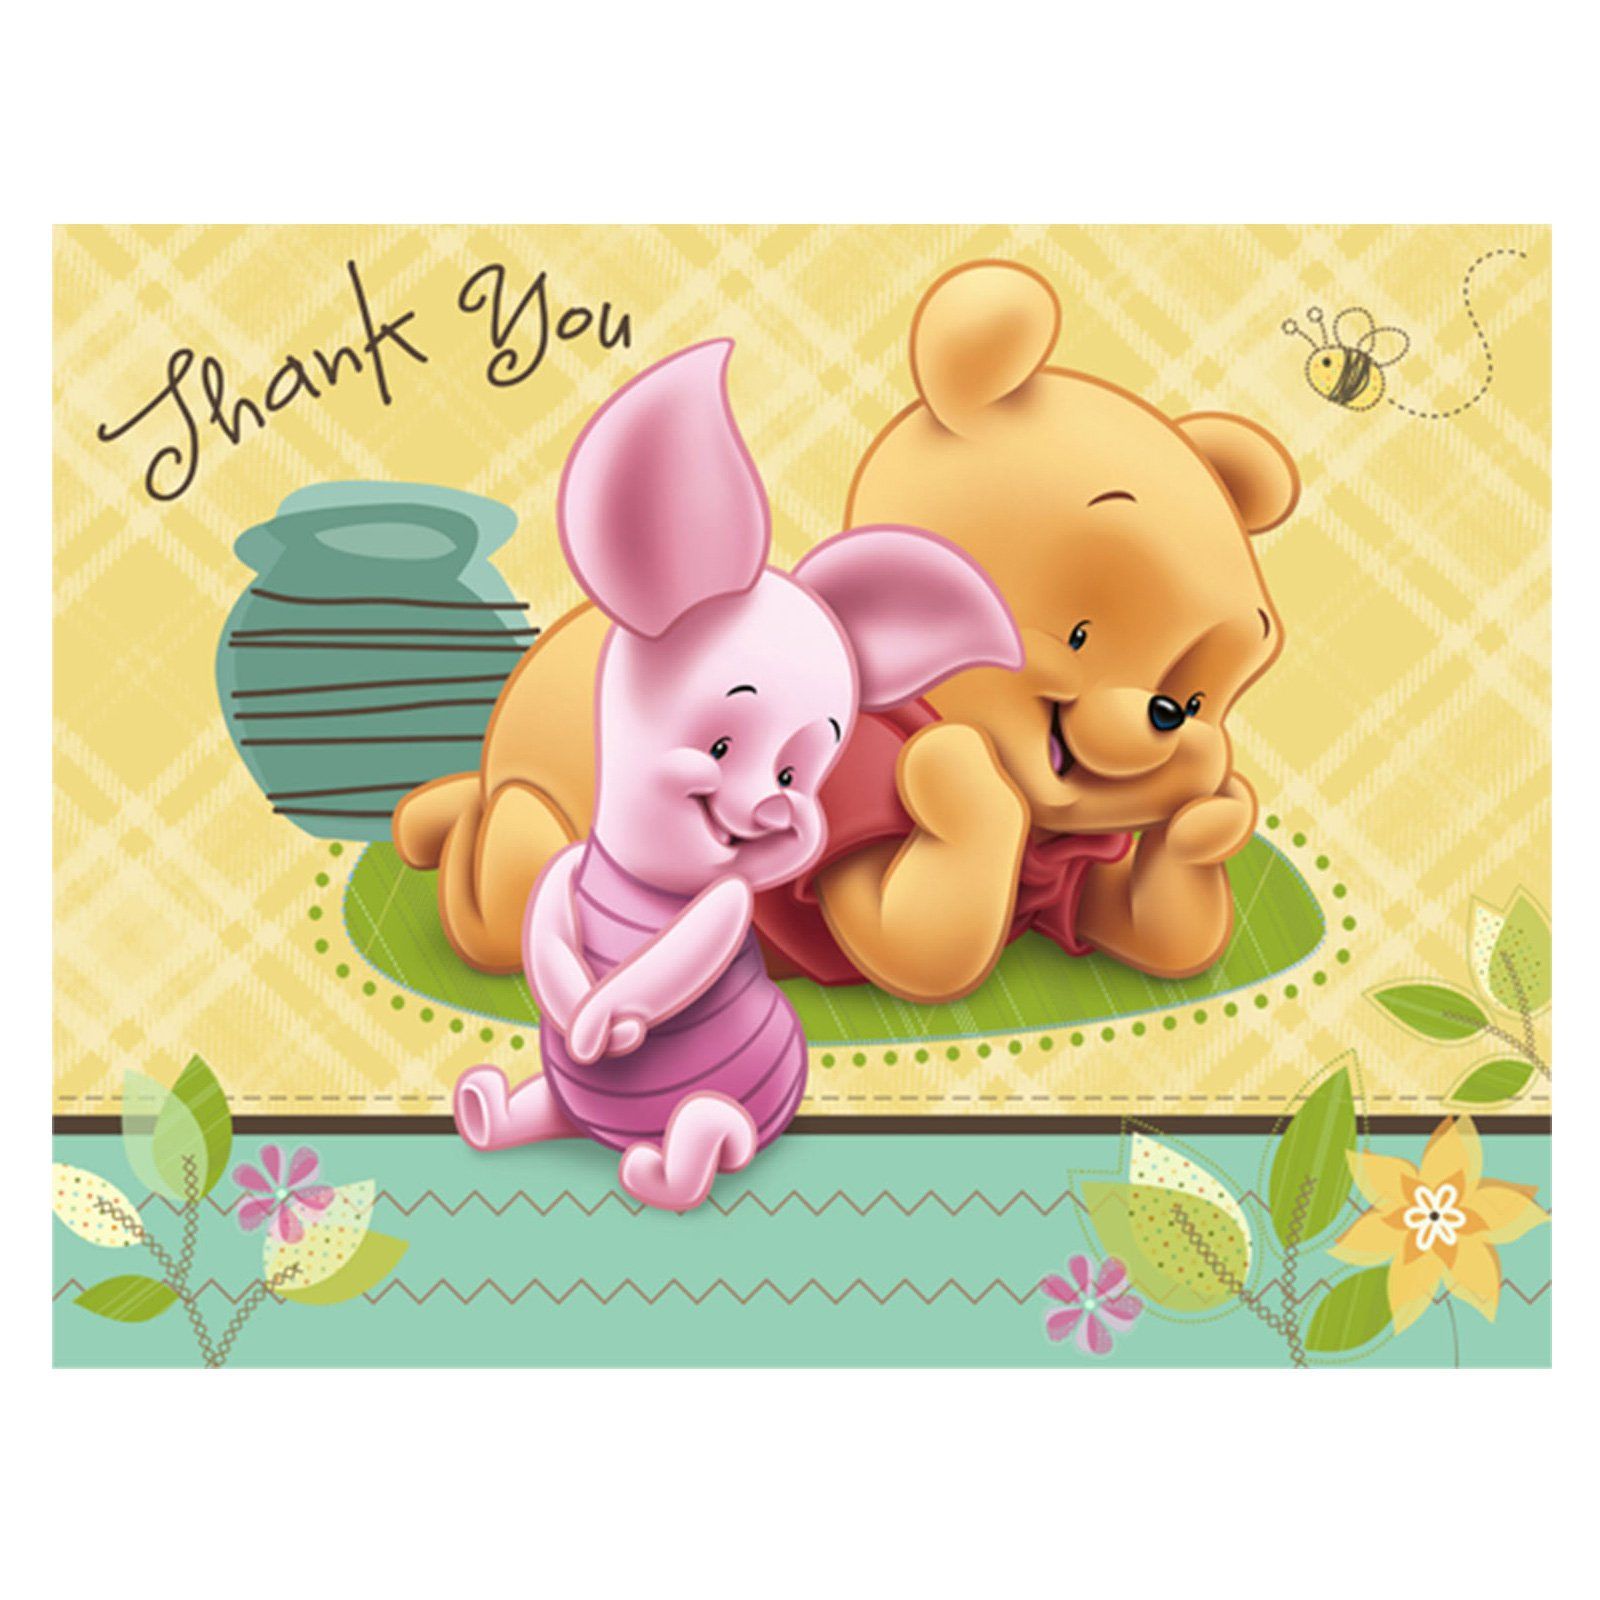 pooh bear wallpaper - Baby Pooh Photo (24007566) - Fanpop